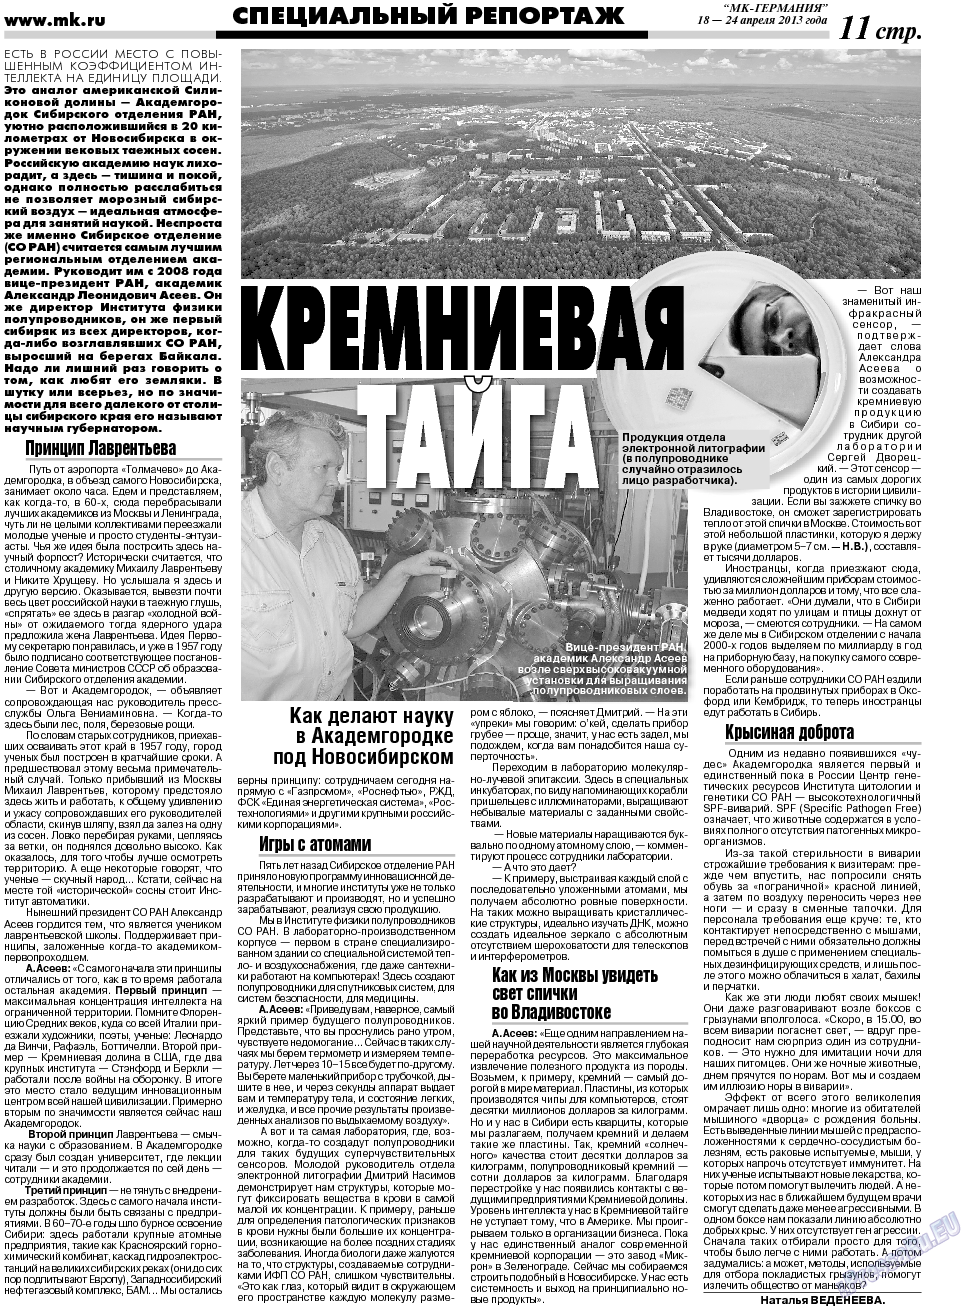 МК-Германия, газета. 2013 №16 стр.11